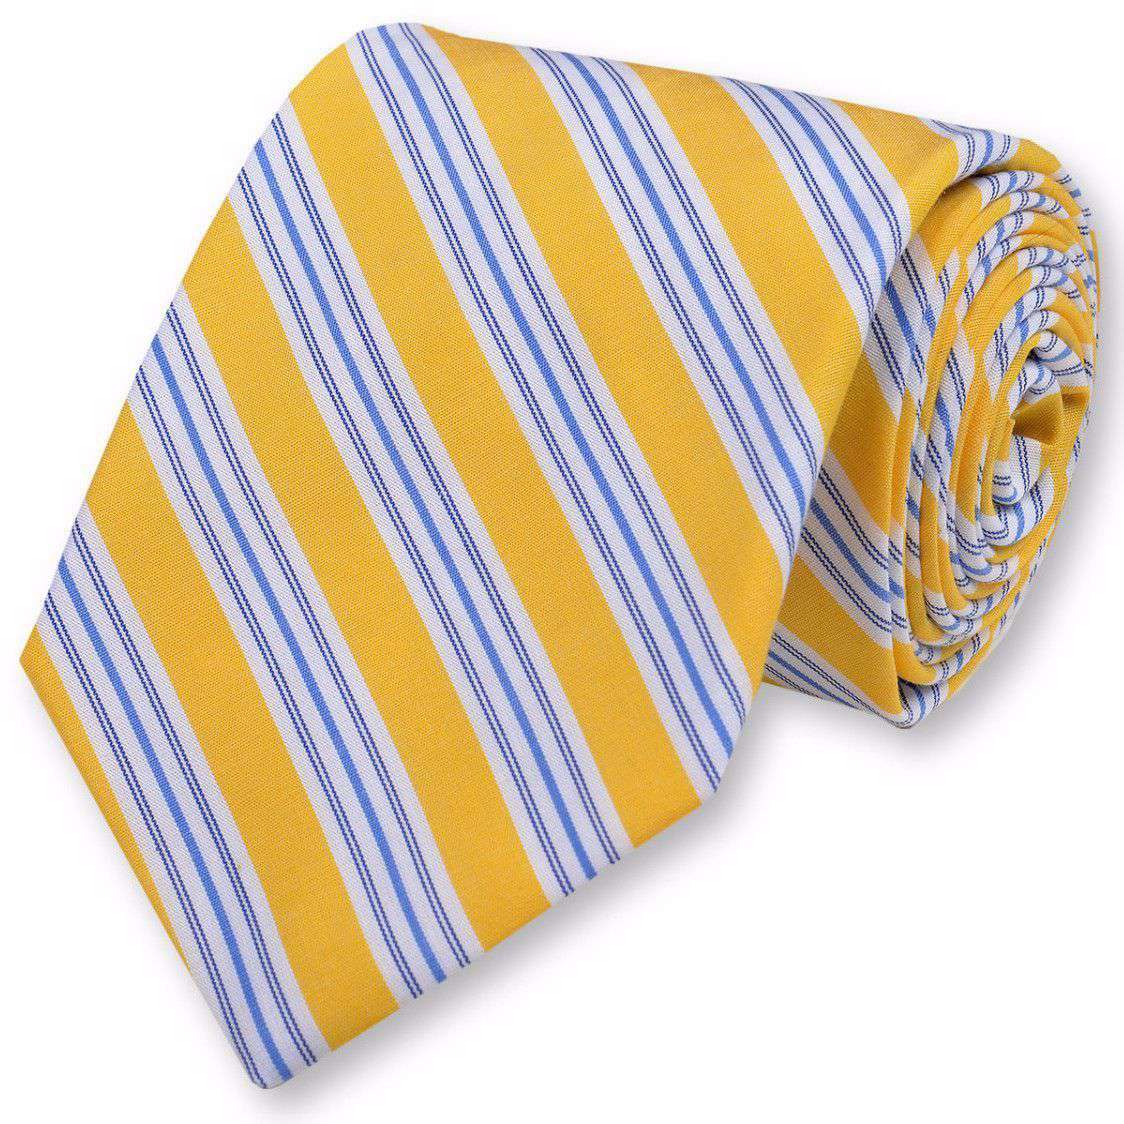 Spinnaker Stripe Necktie in Yellow by High Cotton - Country Club Prep